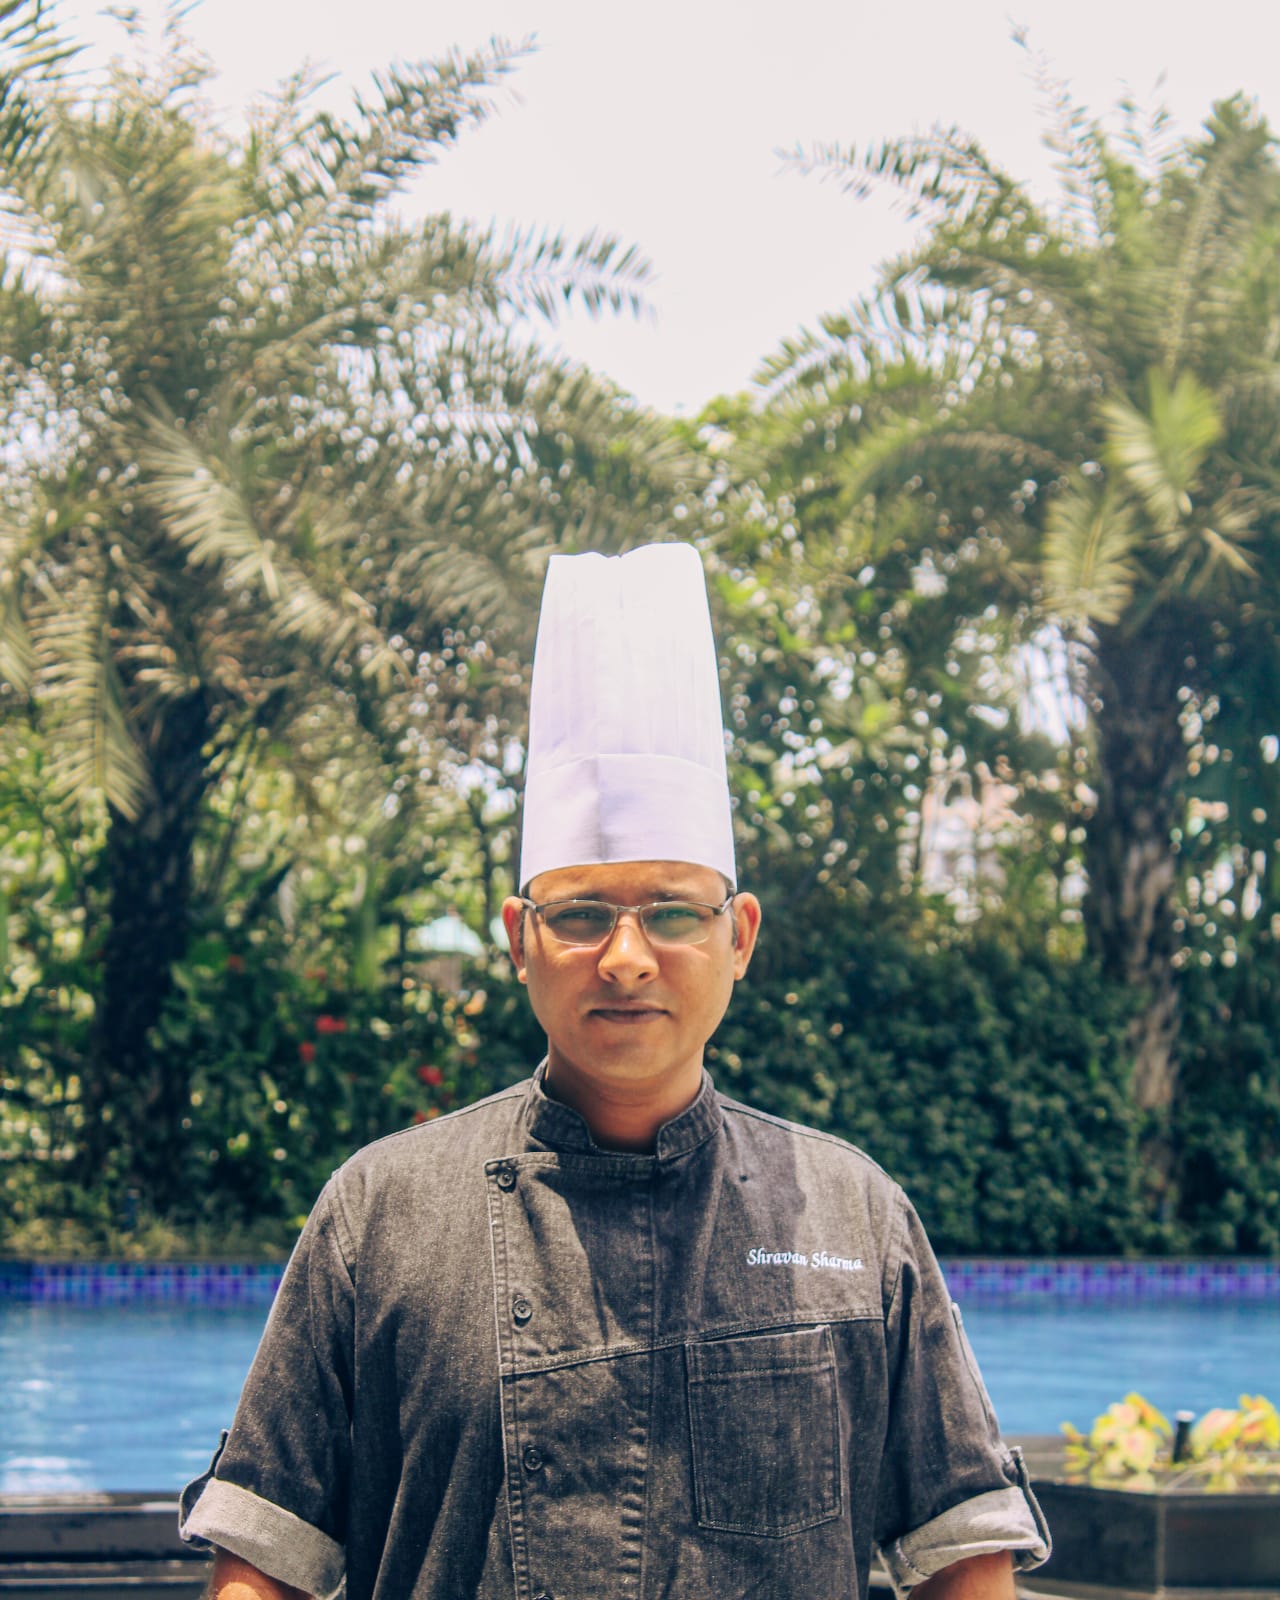 Novotel Ahmedabad appoints Chef Shravan Sharma as Executive Chef